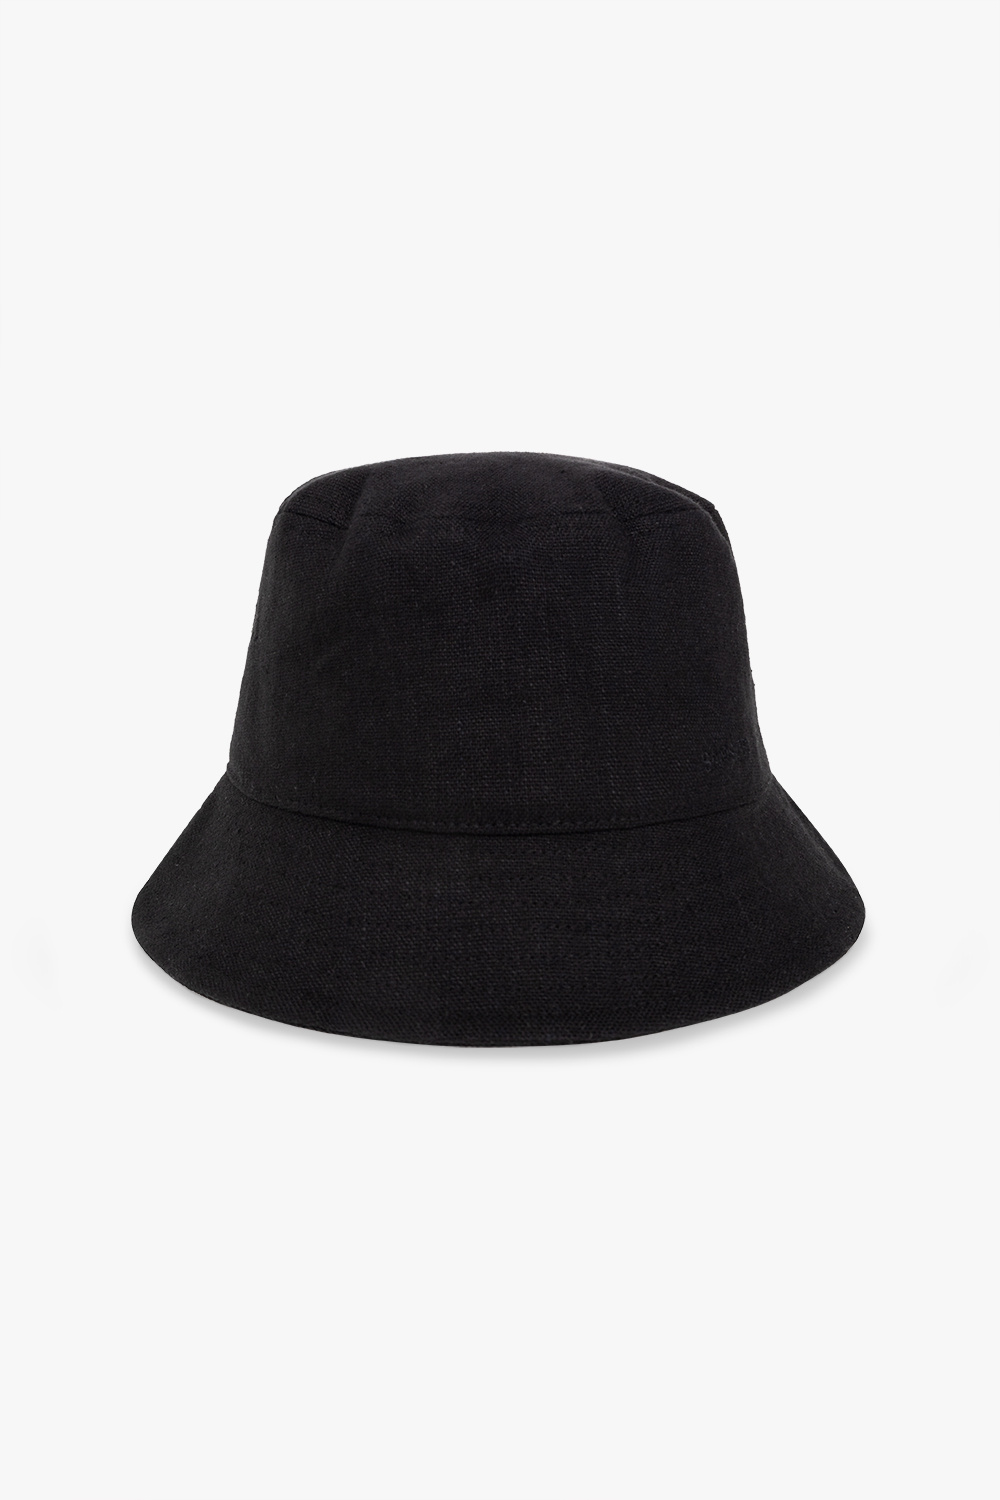 Samsøe Samsøe ‘Anton’ bucket hat | Men's Accessories | Vitkac